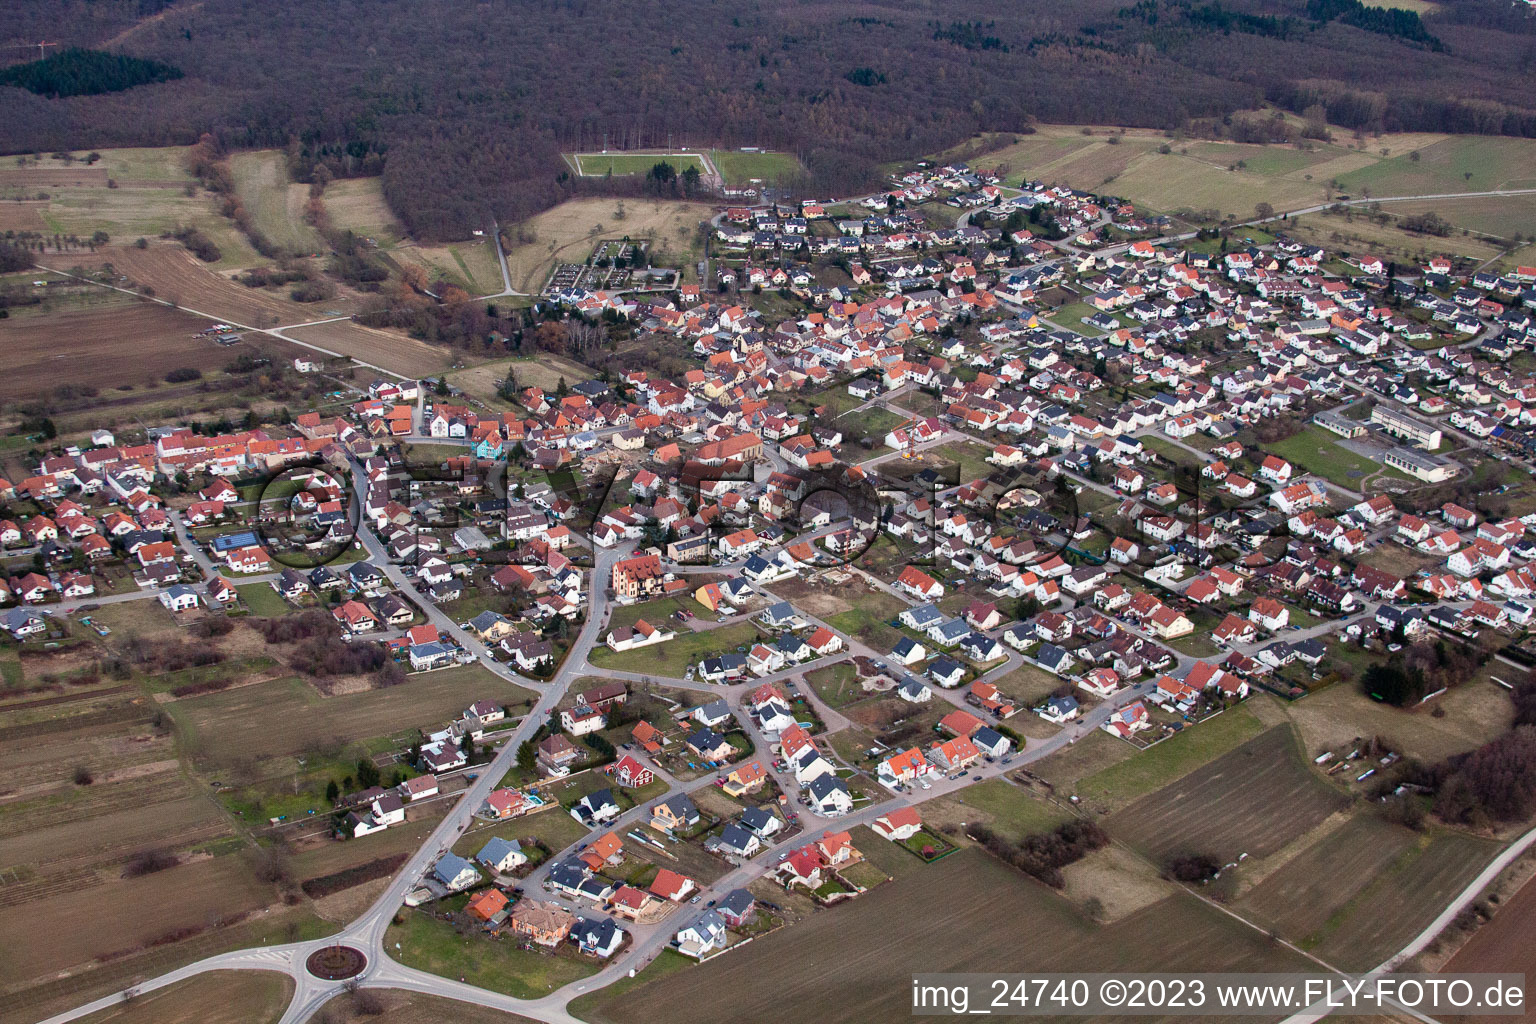 Mulhouse, Retigheim in Retigheim in the state Baden-Wuerttemberg, Germany